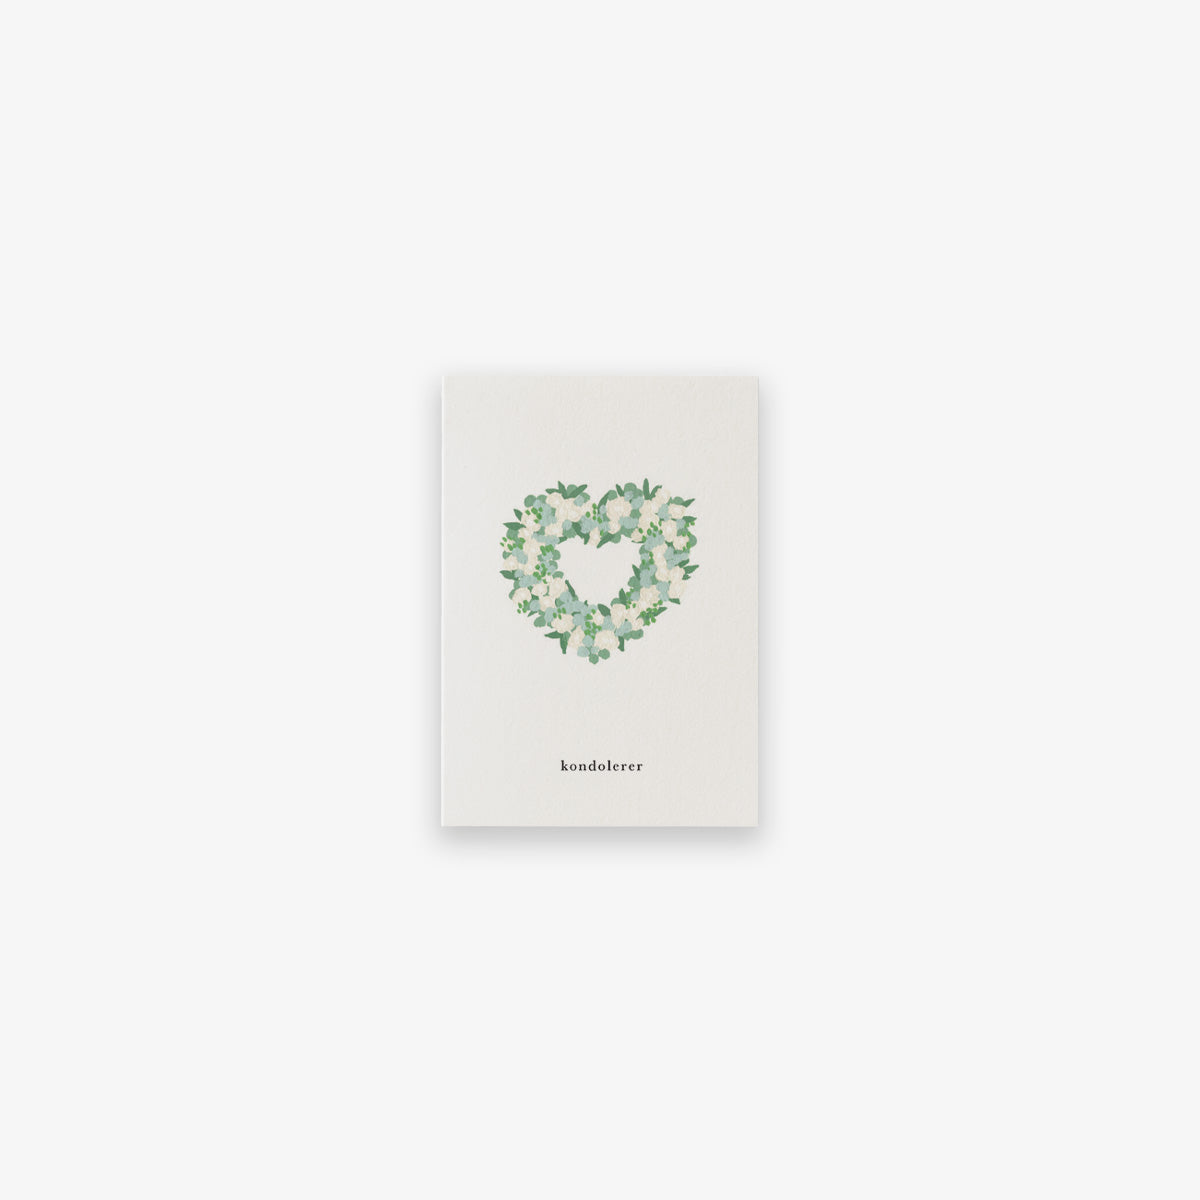 SMALL GREETING CARD // BLOMSTERHJERTE (DANISH)